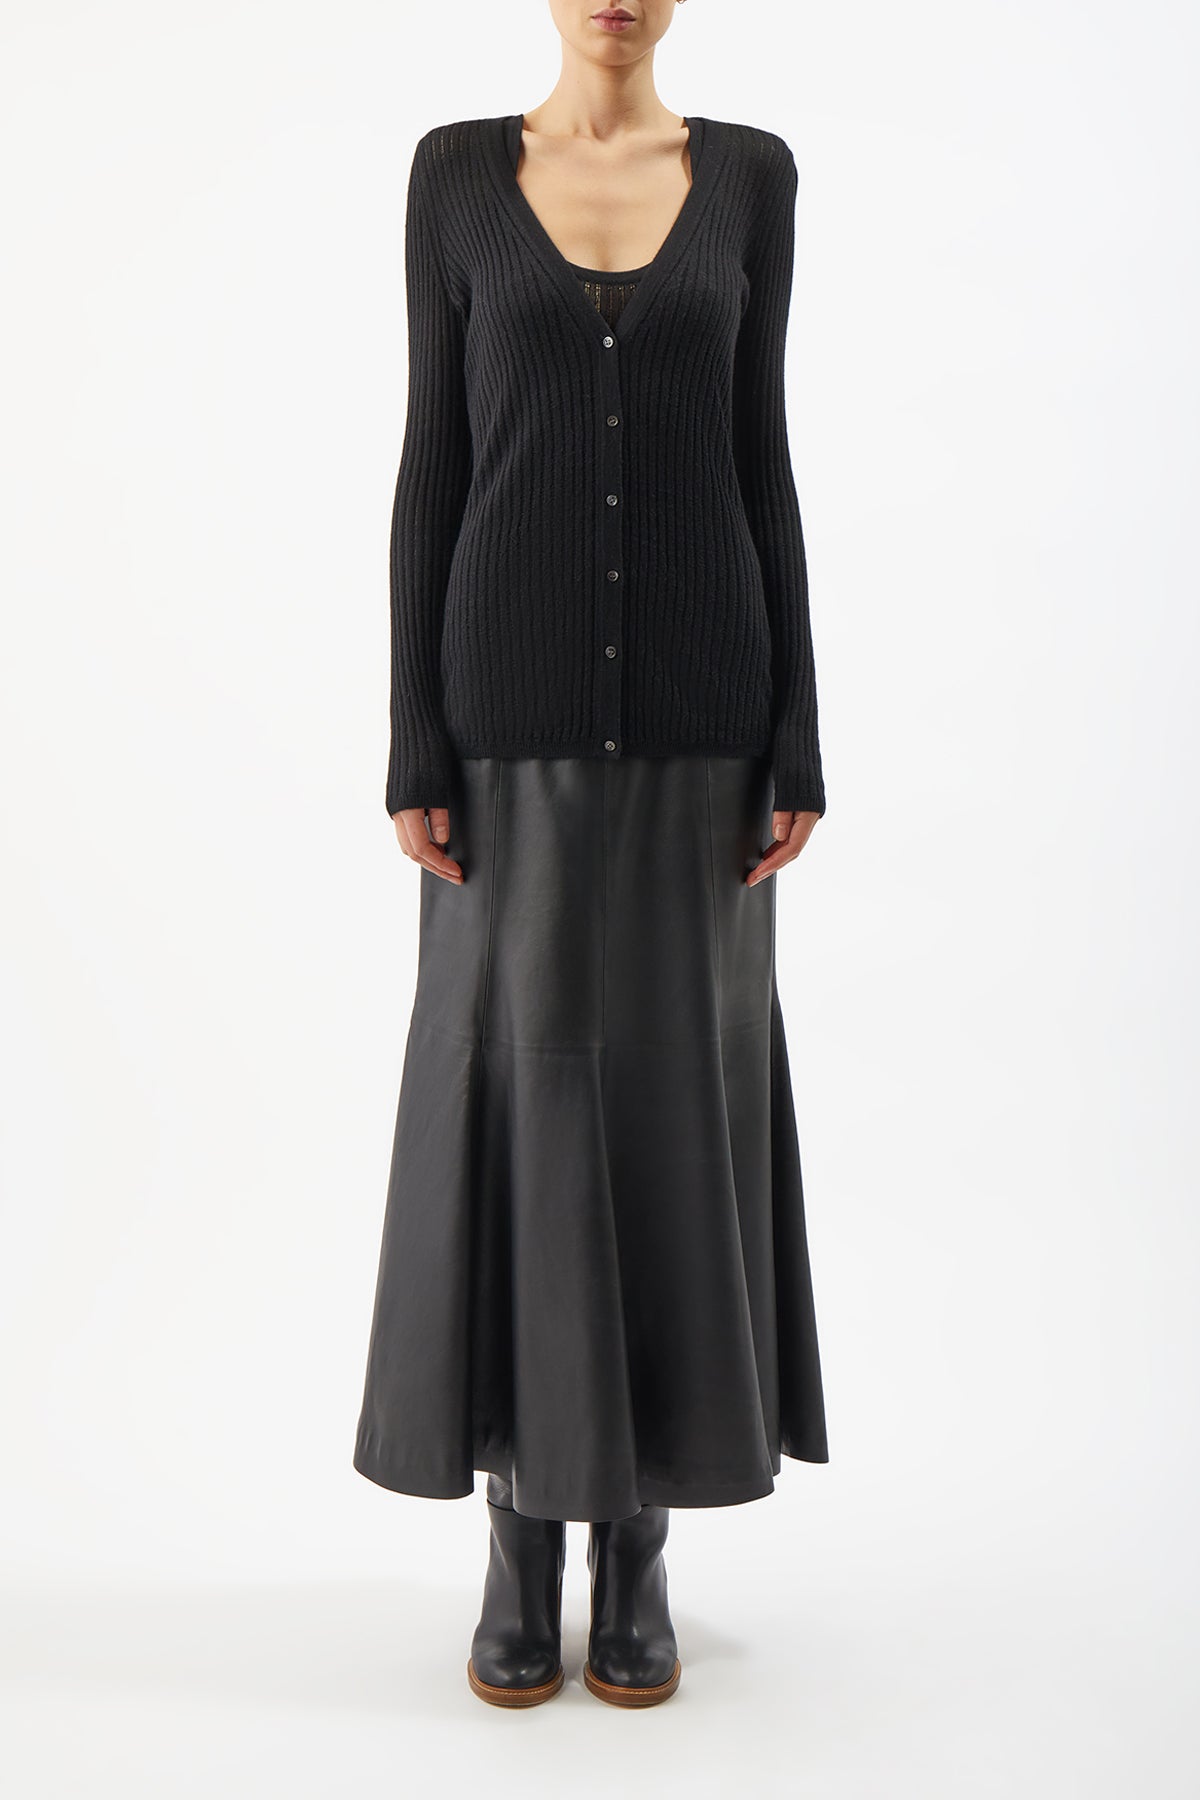 Emma Pointelle Knit Cardigan in Black Cashmere Silk